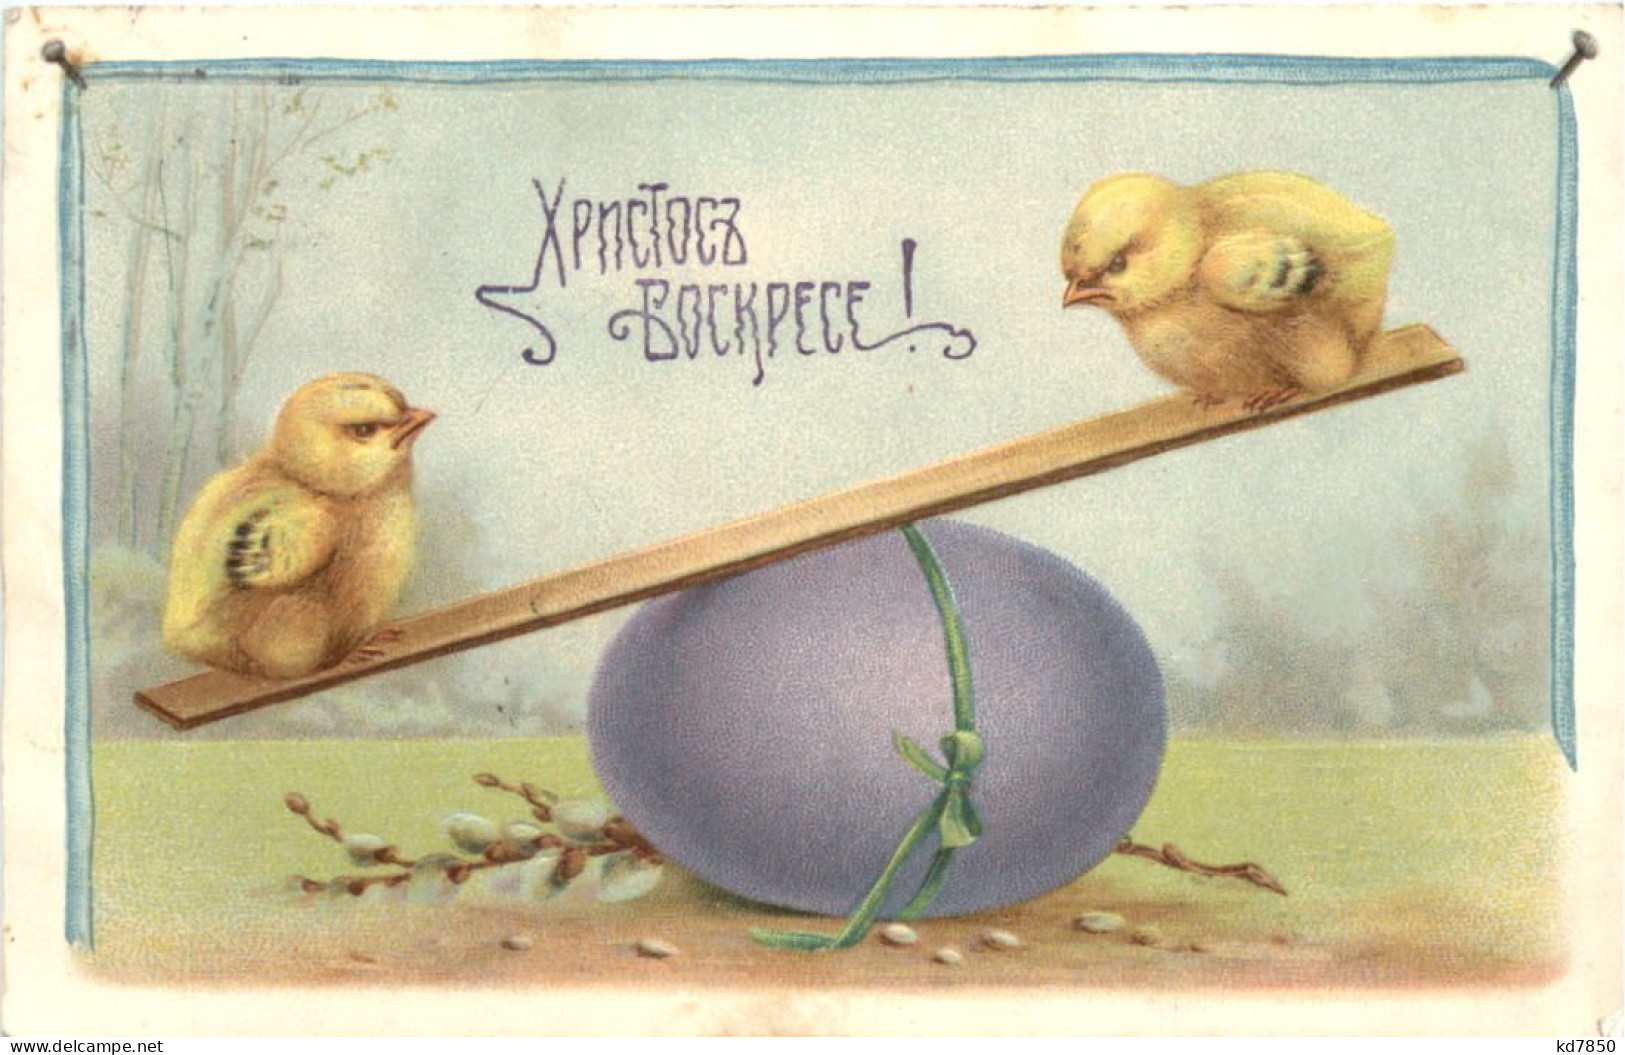 Ostern - Prägekarte - Pascua